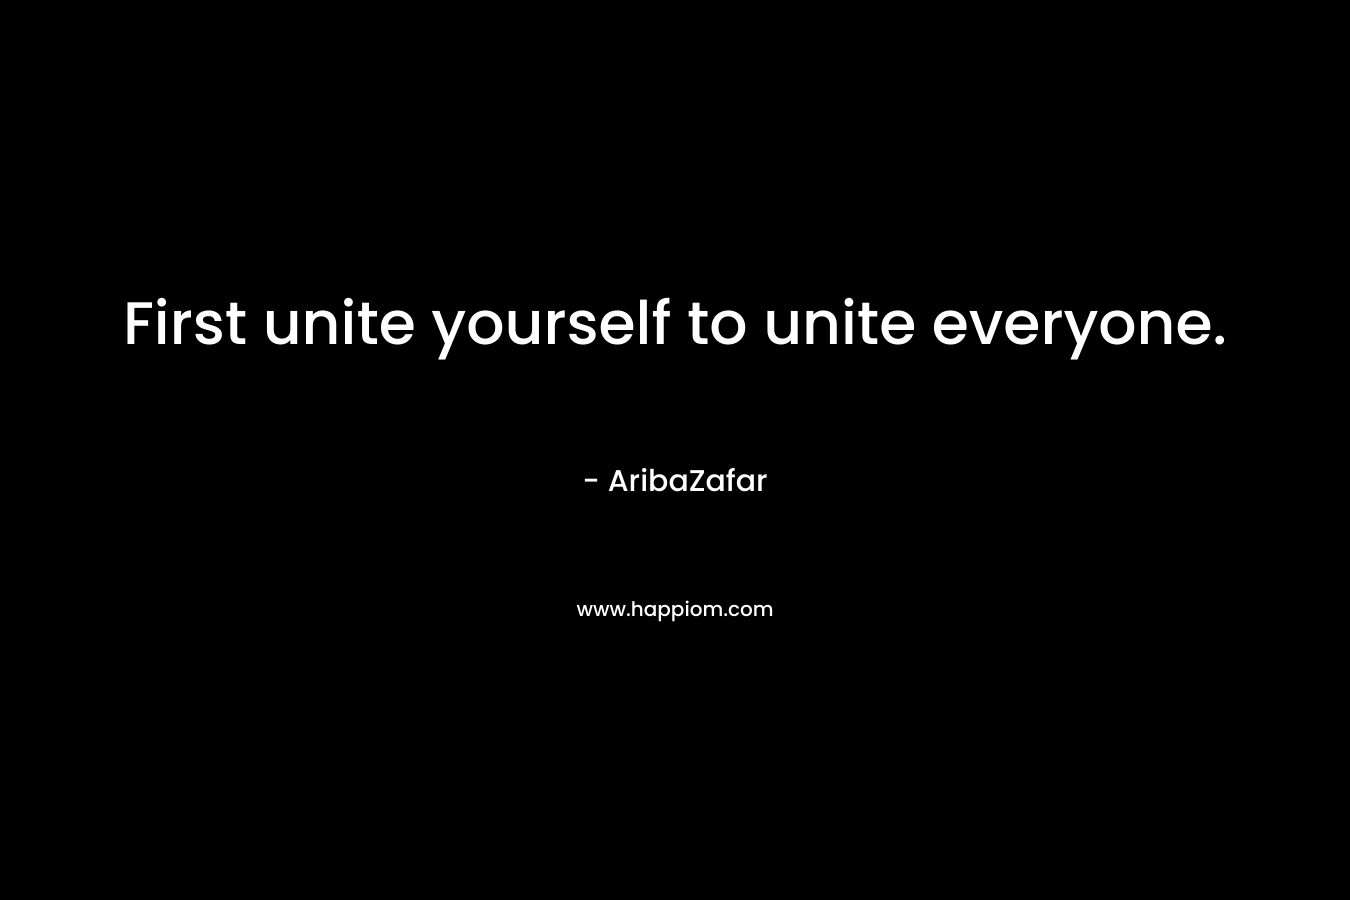 First unite yourself to unite everyone.